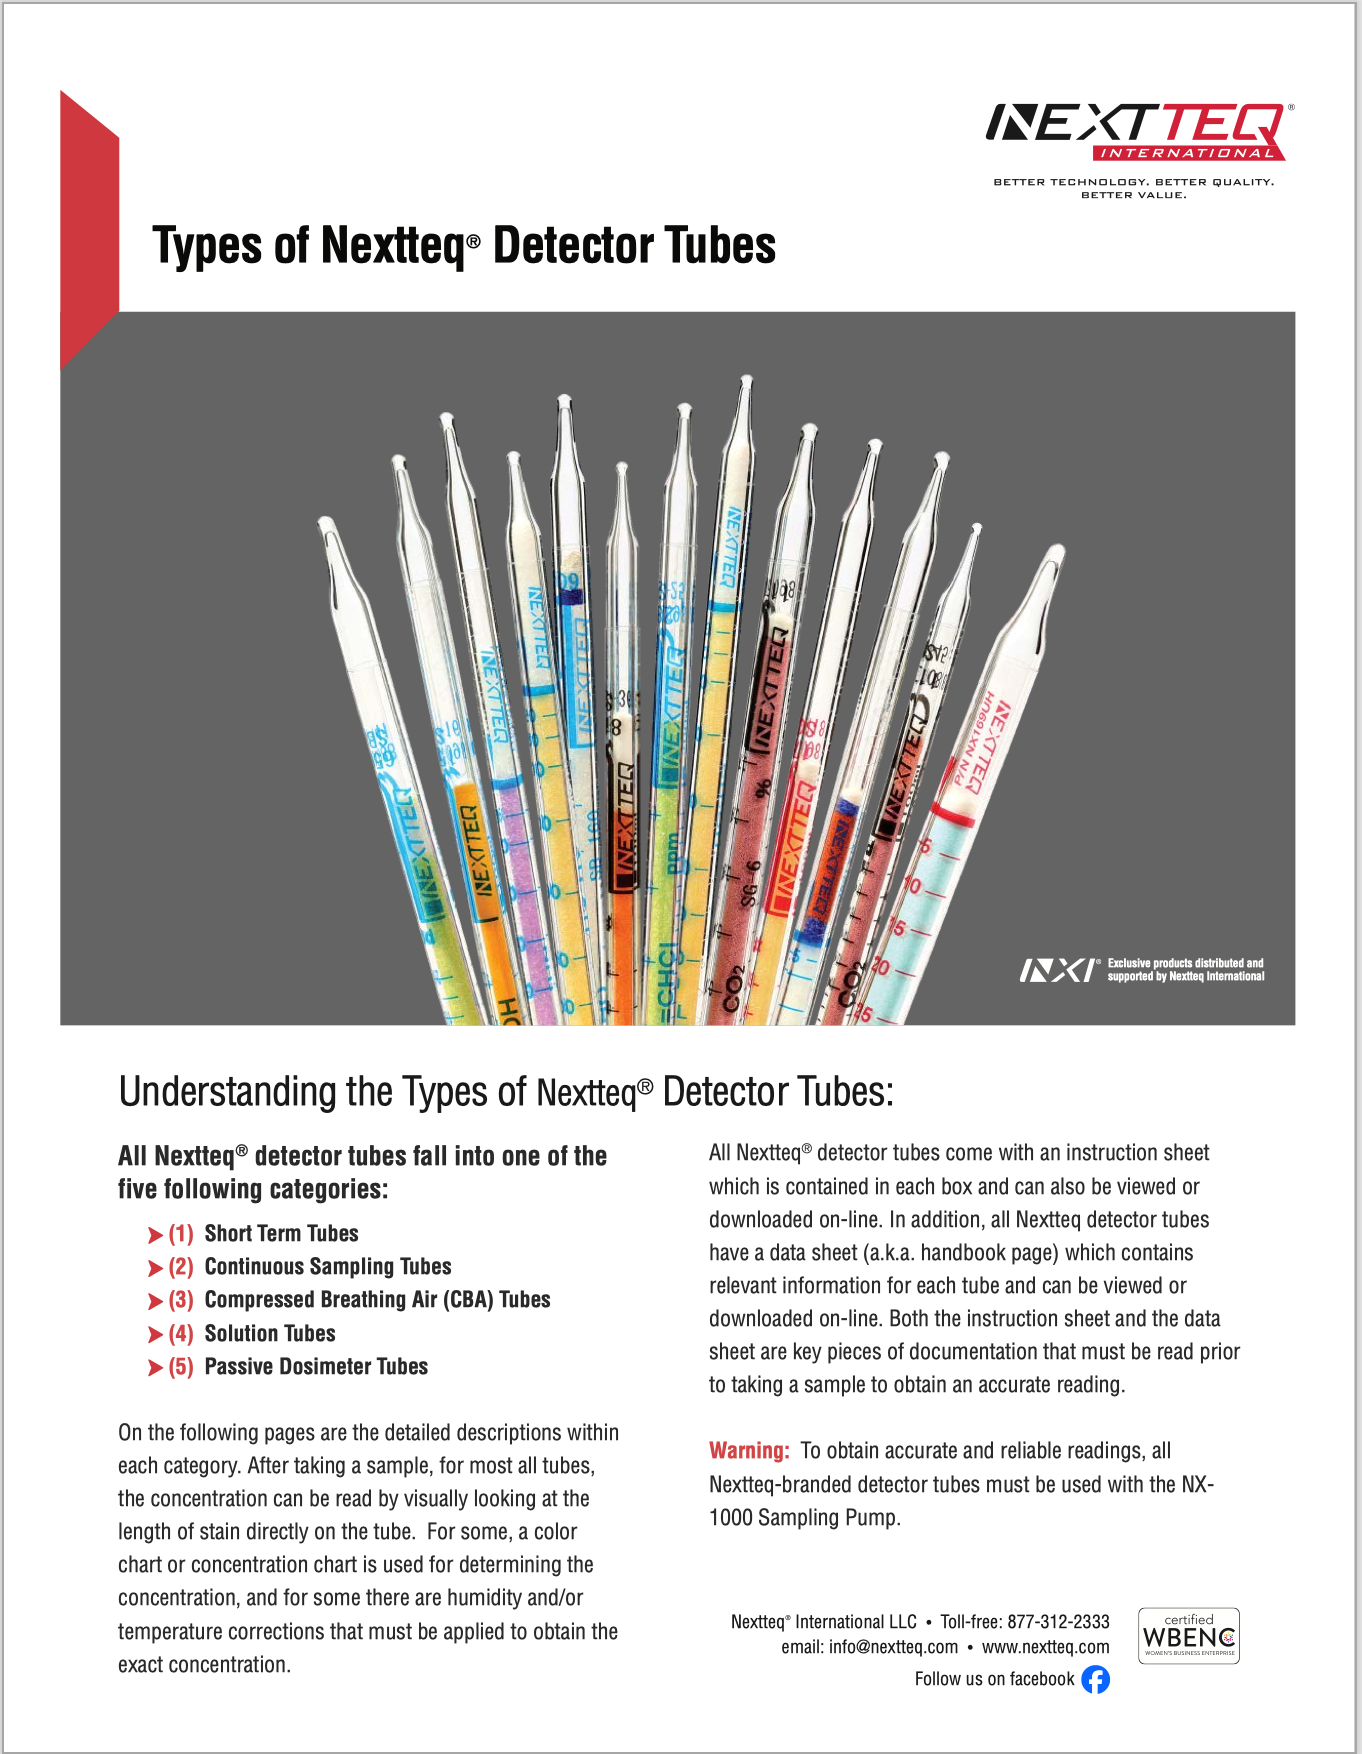 Types of Nextteq® Detector Tubes.